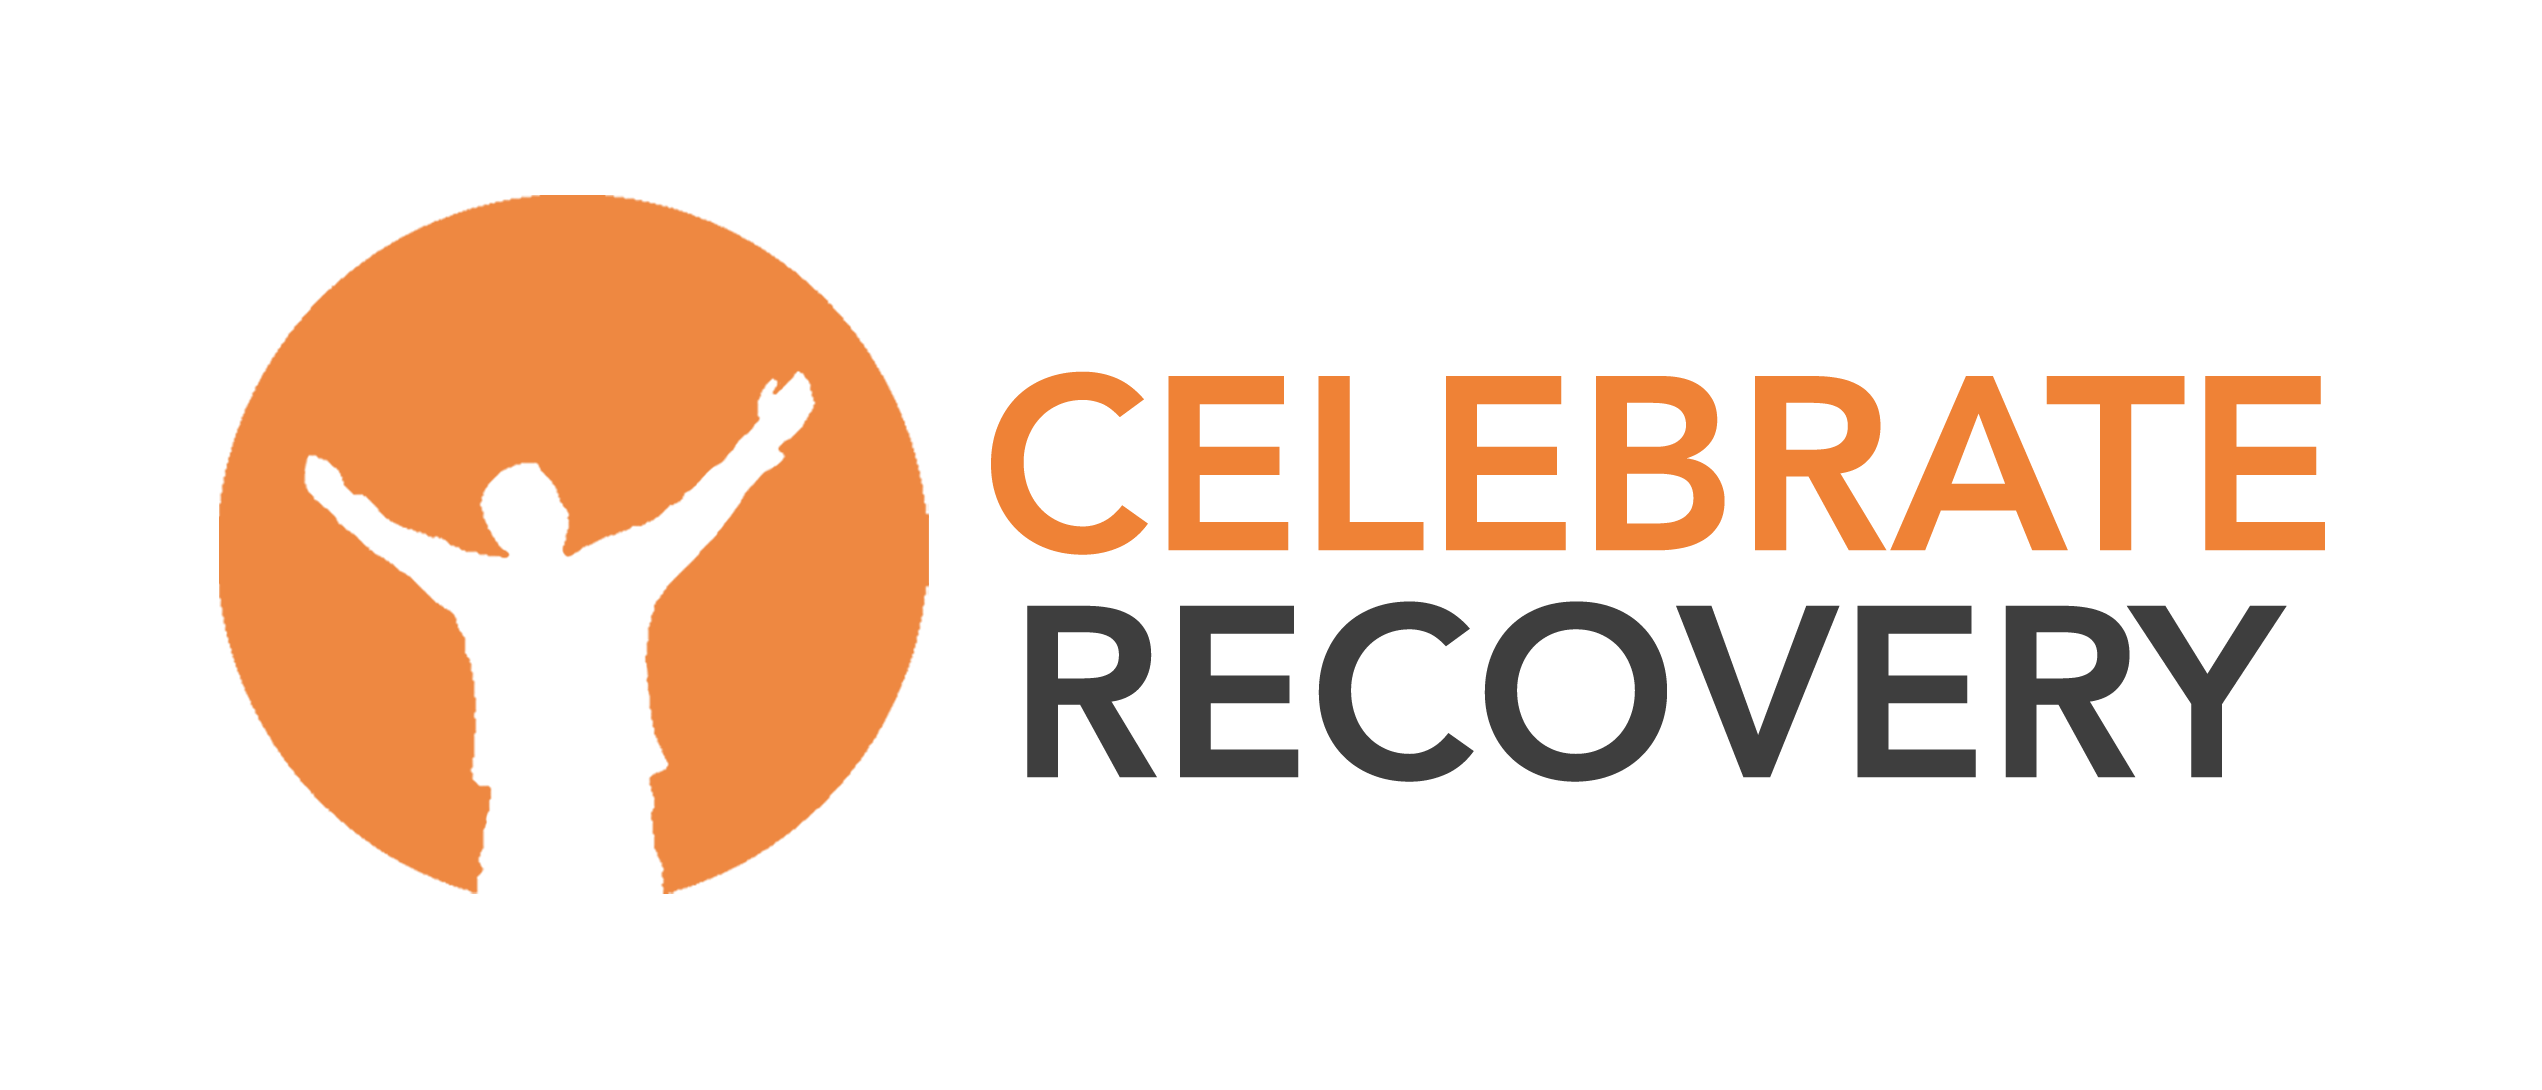 Recovery Logo - Celebrate recovery Logos